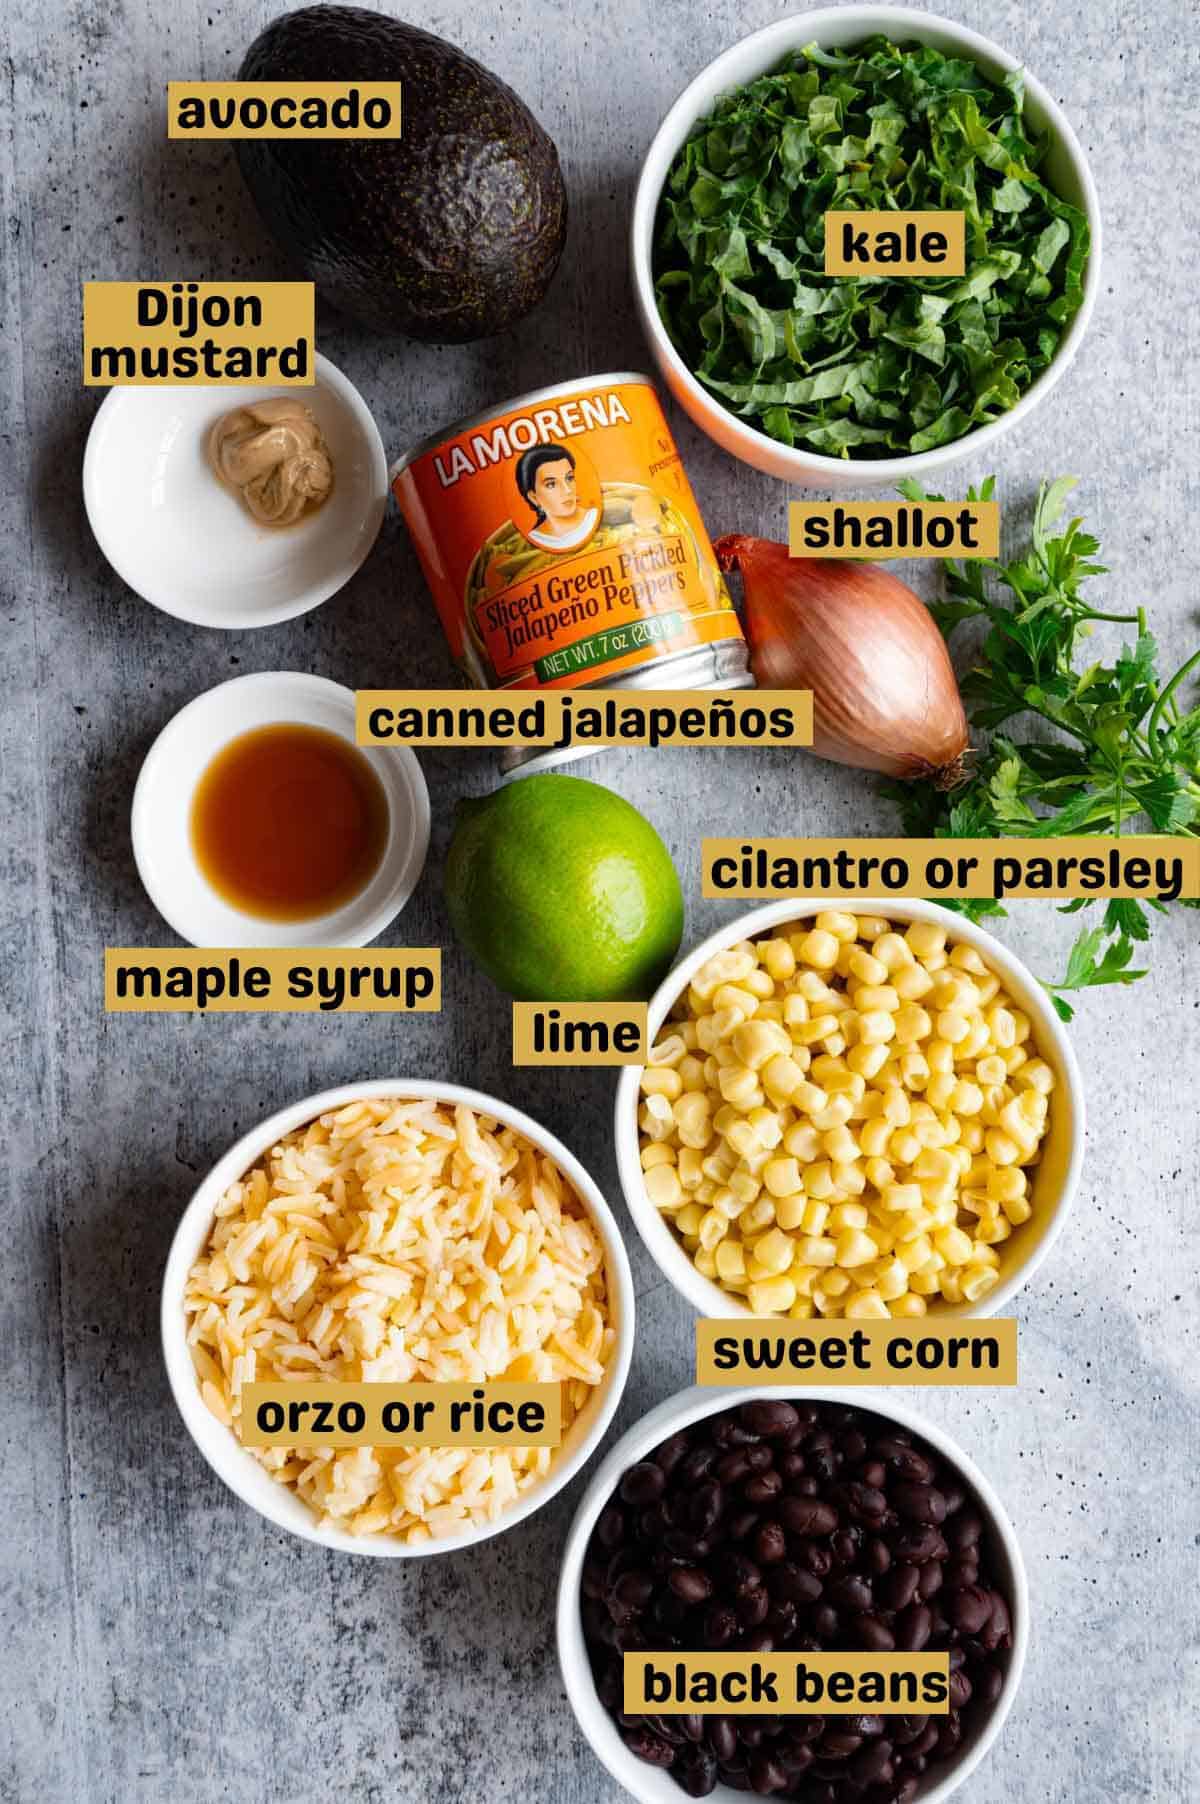 Avocado, chopped kale, canned jalapeños, Dijon, shallot, cilantro, maple syrup, lime, orzo rice, sweet corn, and black beans.